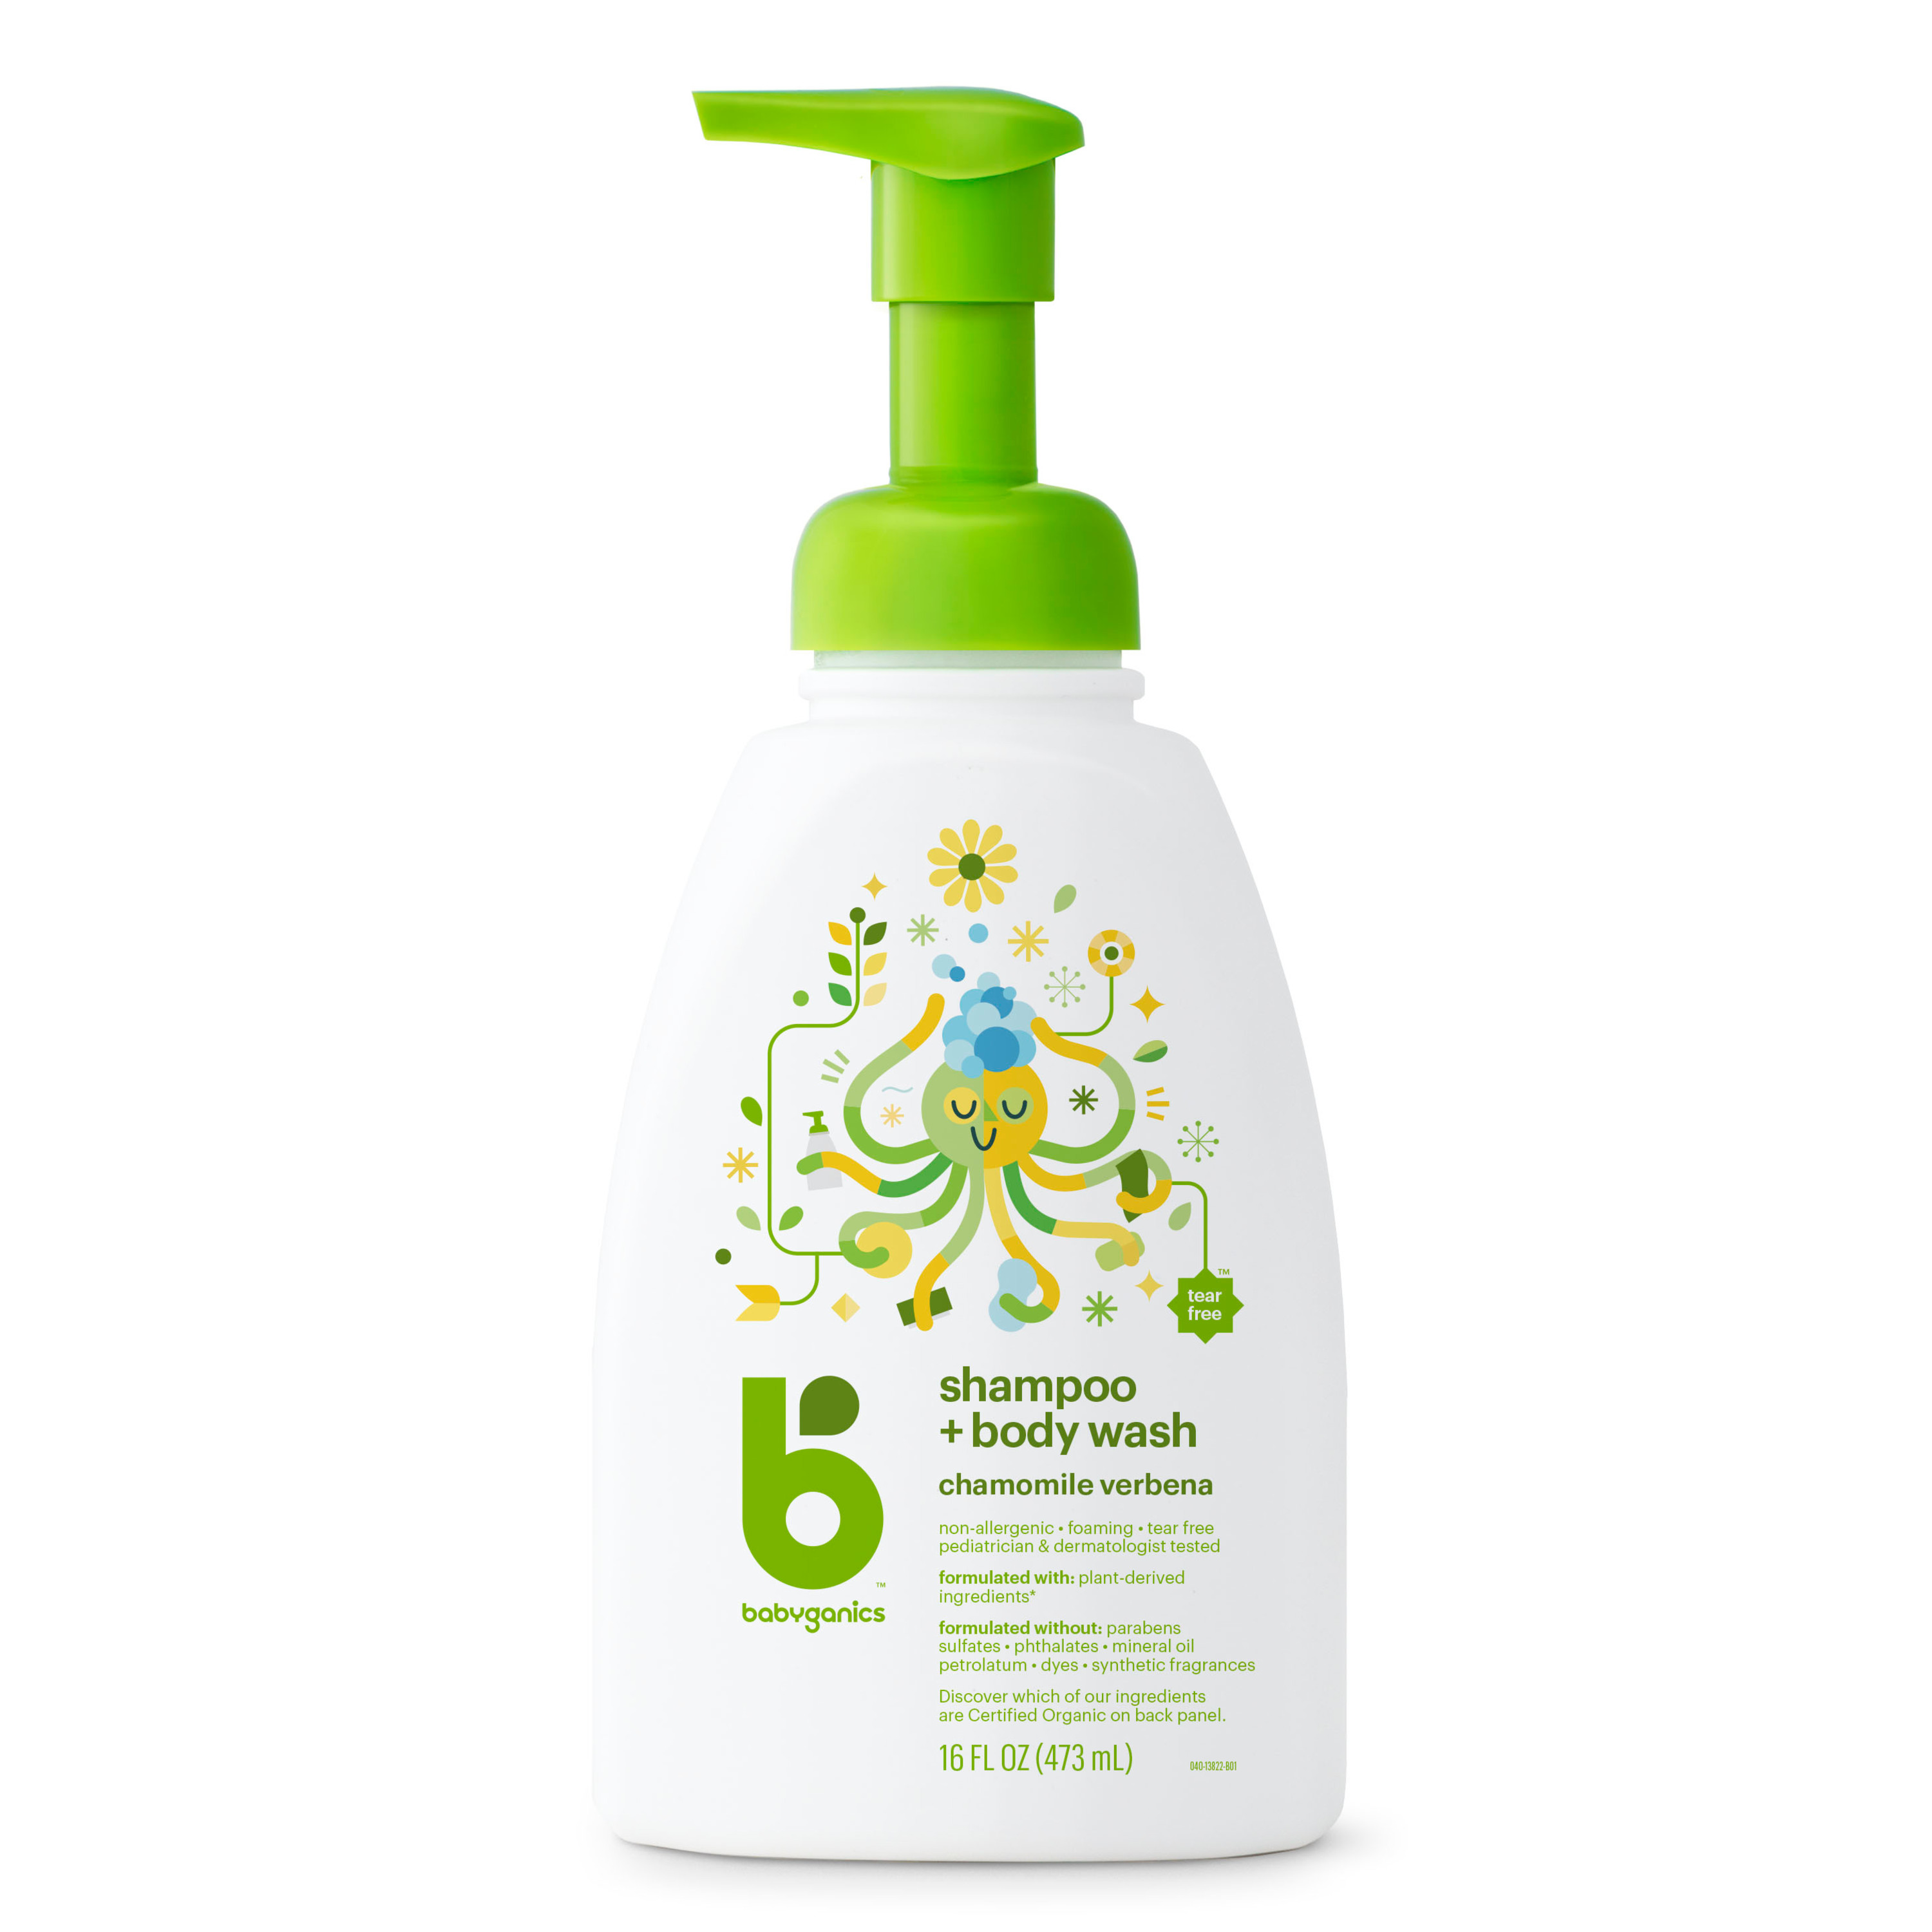 Babyganics Baby Shampoo + Body Wash Pump Bottle, Chamomile Verbena, 16oz - image 1 of 6